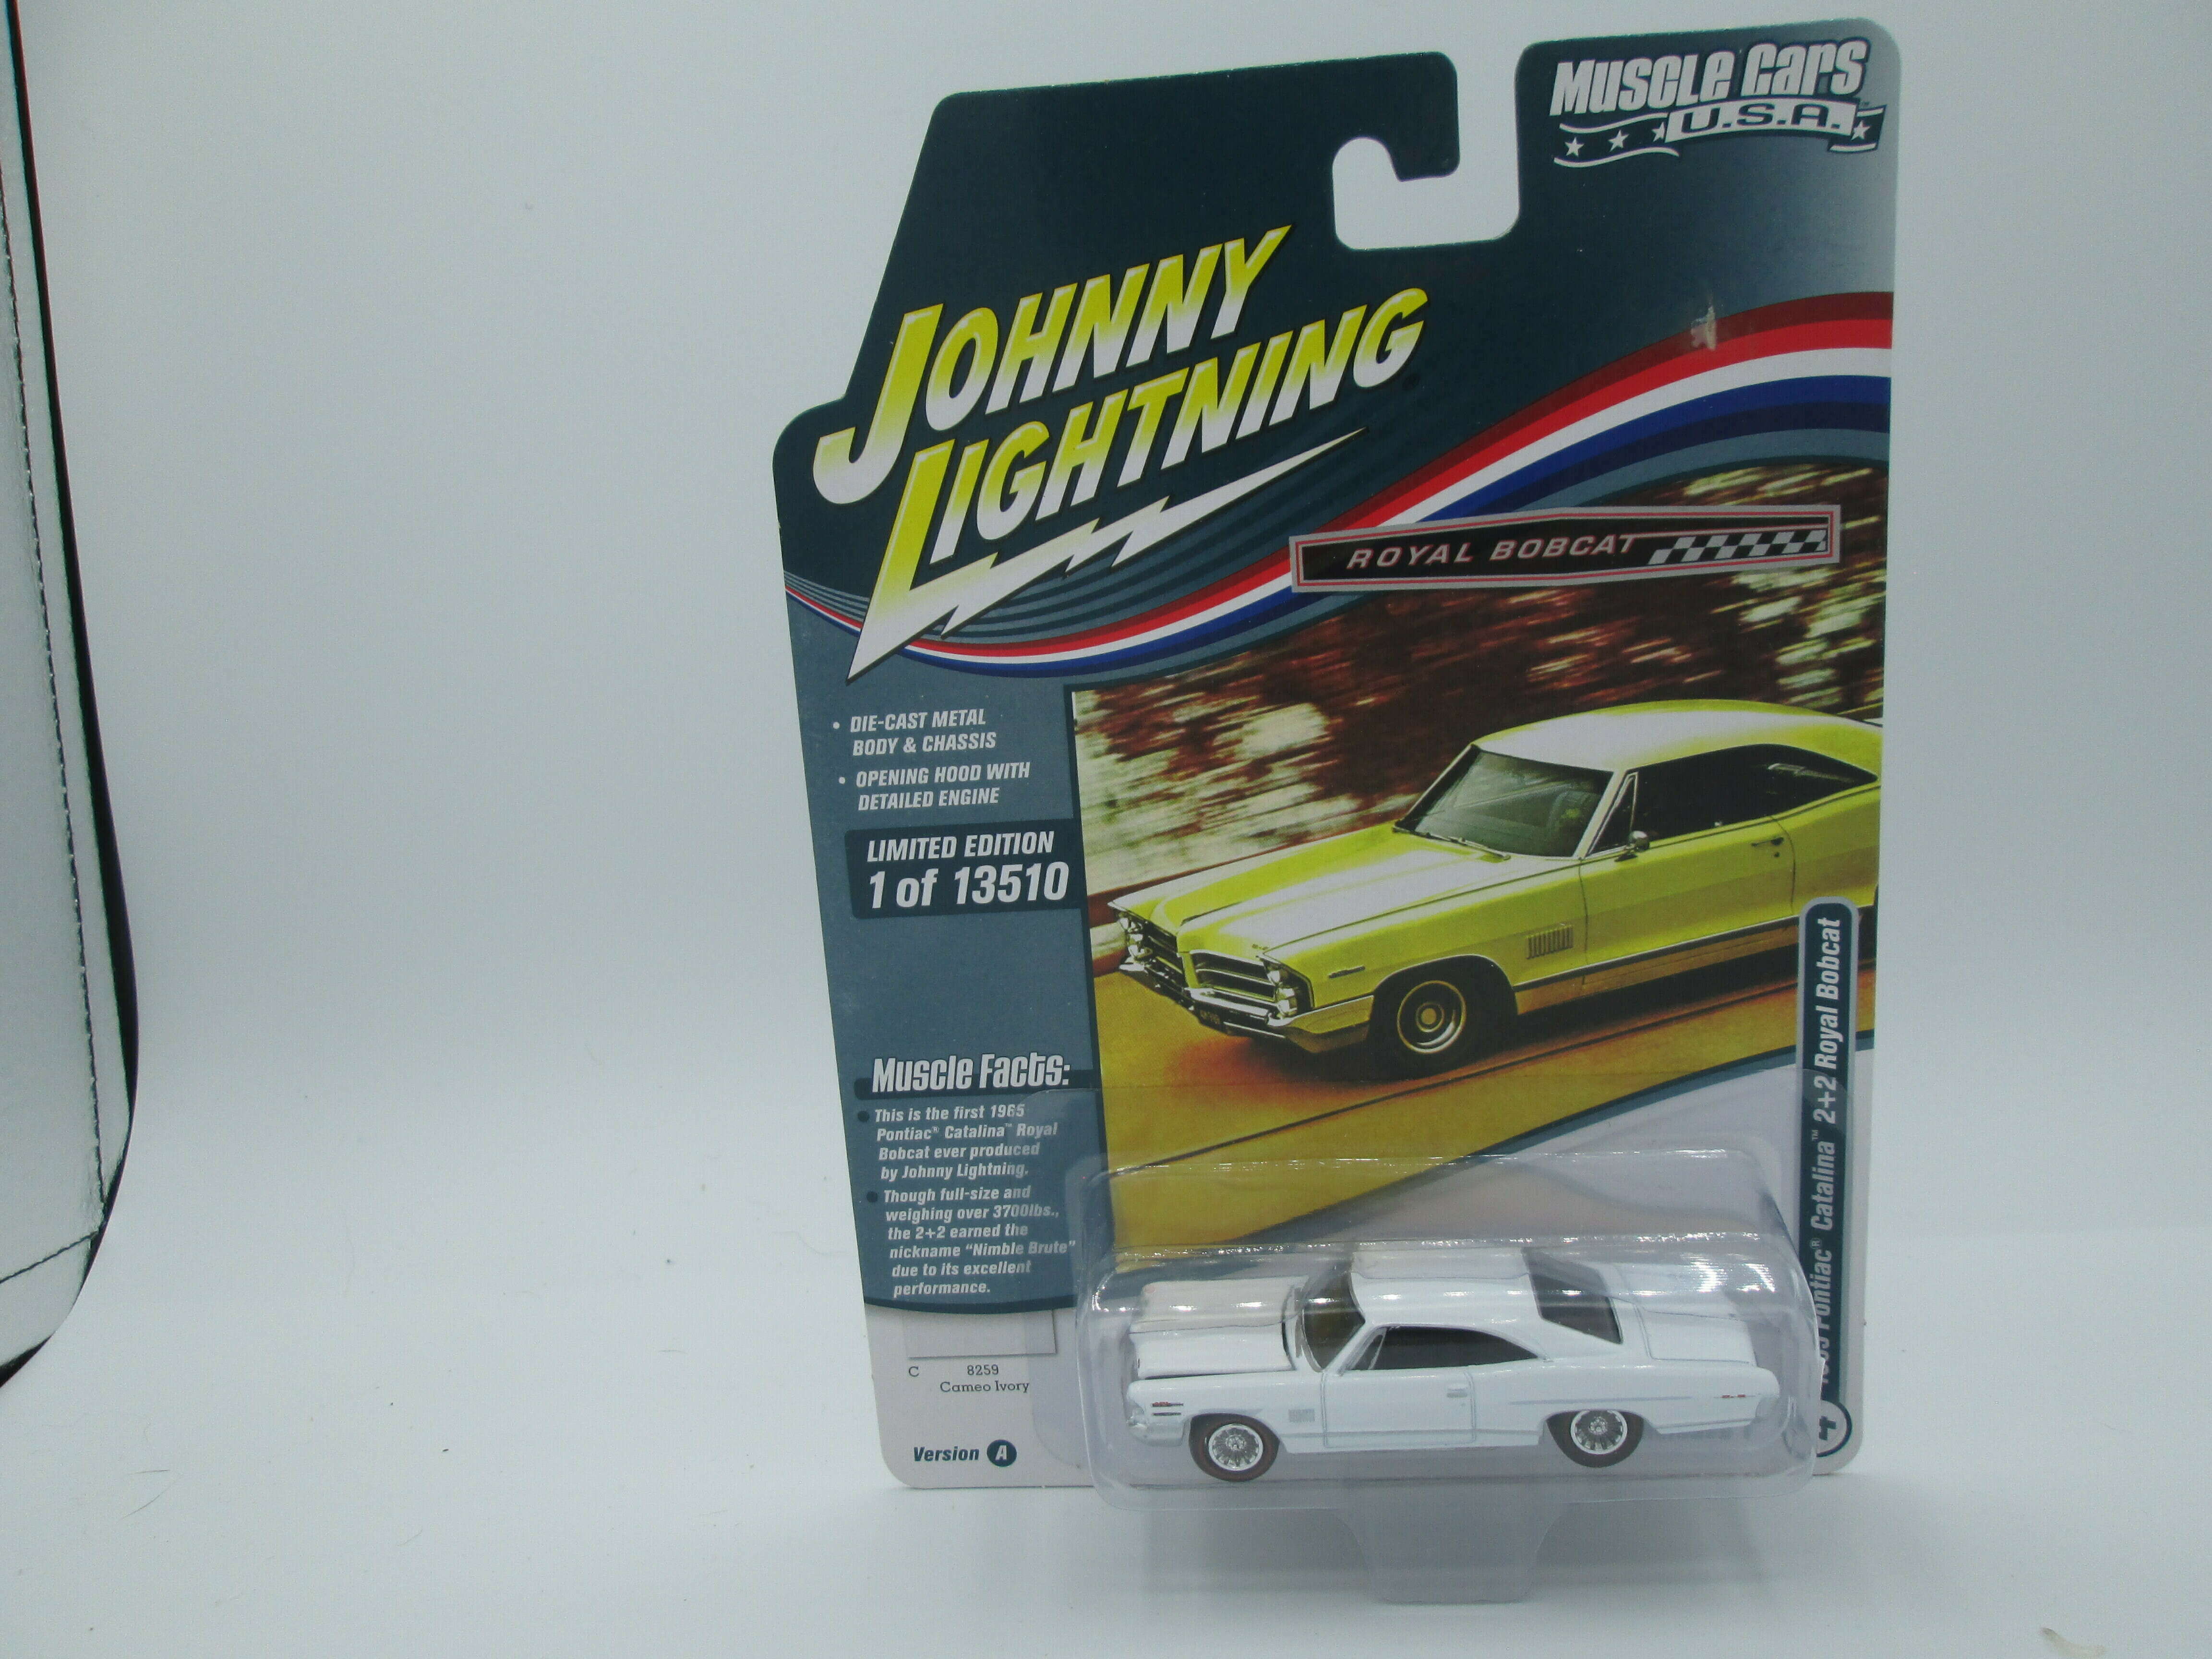 Johnny Lightning Muscle Cars USA - 1965 Pontiac Catalina 2+2 Royal